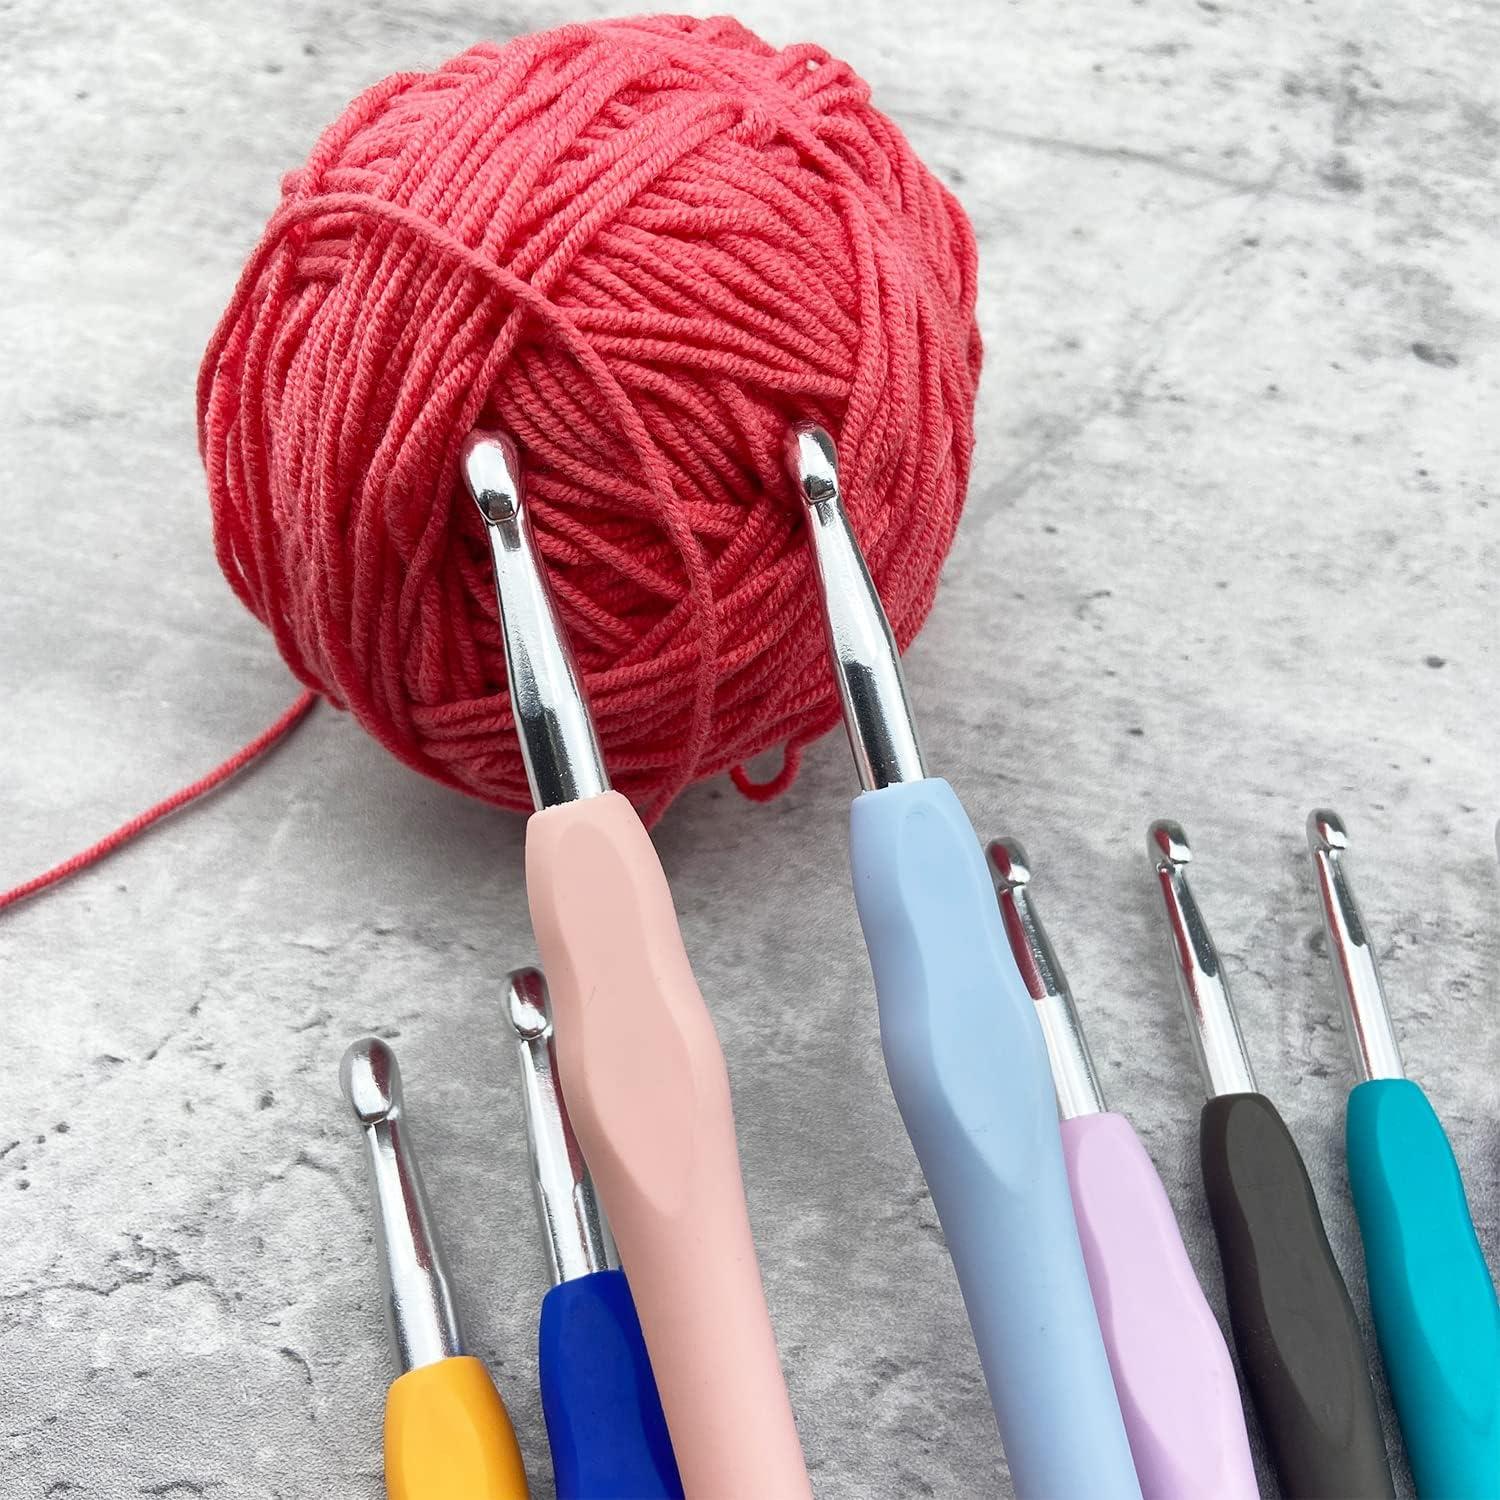  Mdoker Extra Long Crochet Hooks,Large Size N/P/15(10.0mm)  Crochet Needles,Ergonomic Grip Soft Handles for Handmade DIY  Crocheting,Perfect for Arthritic Hands